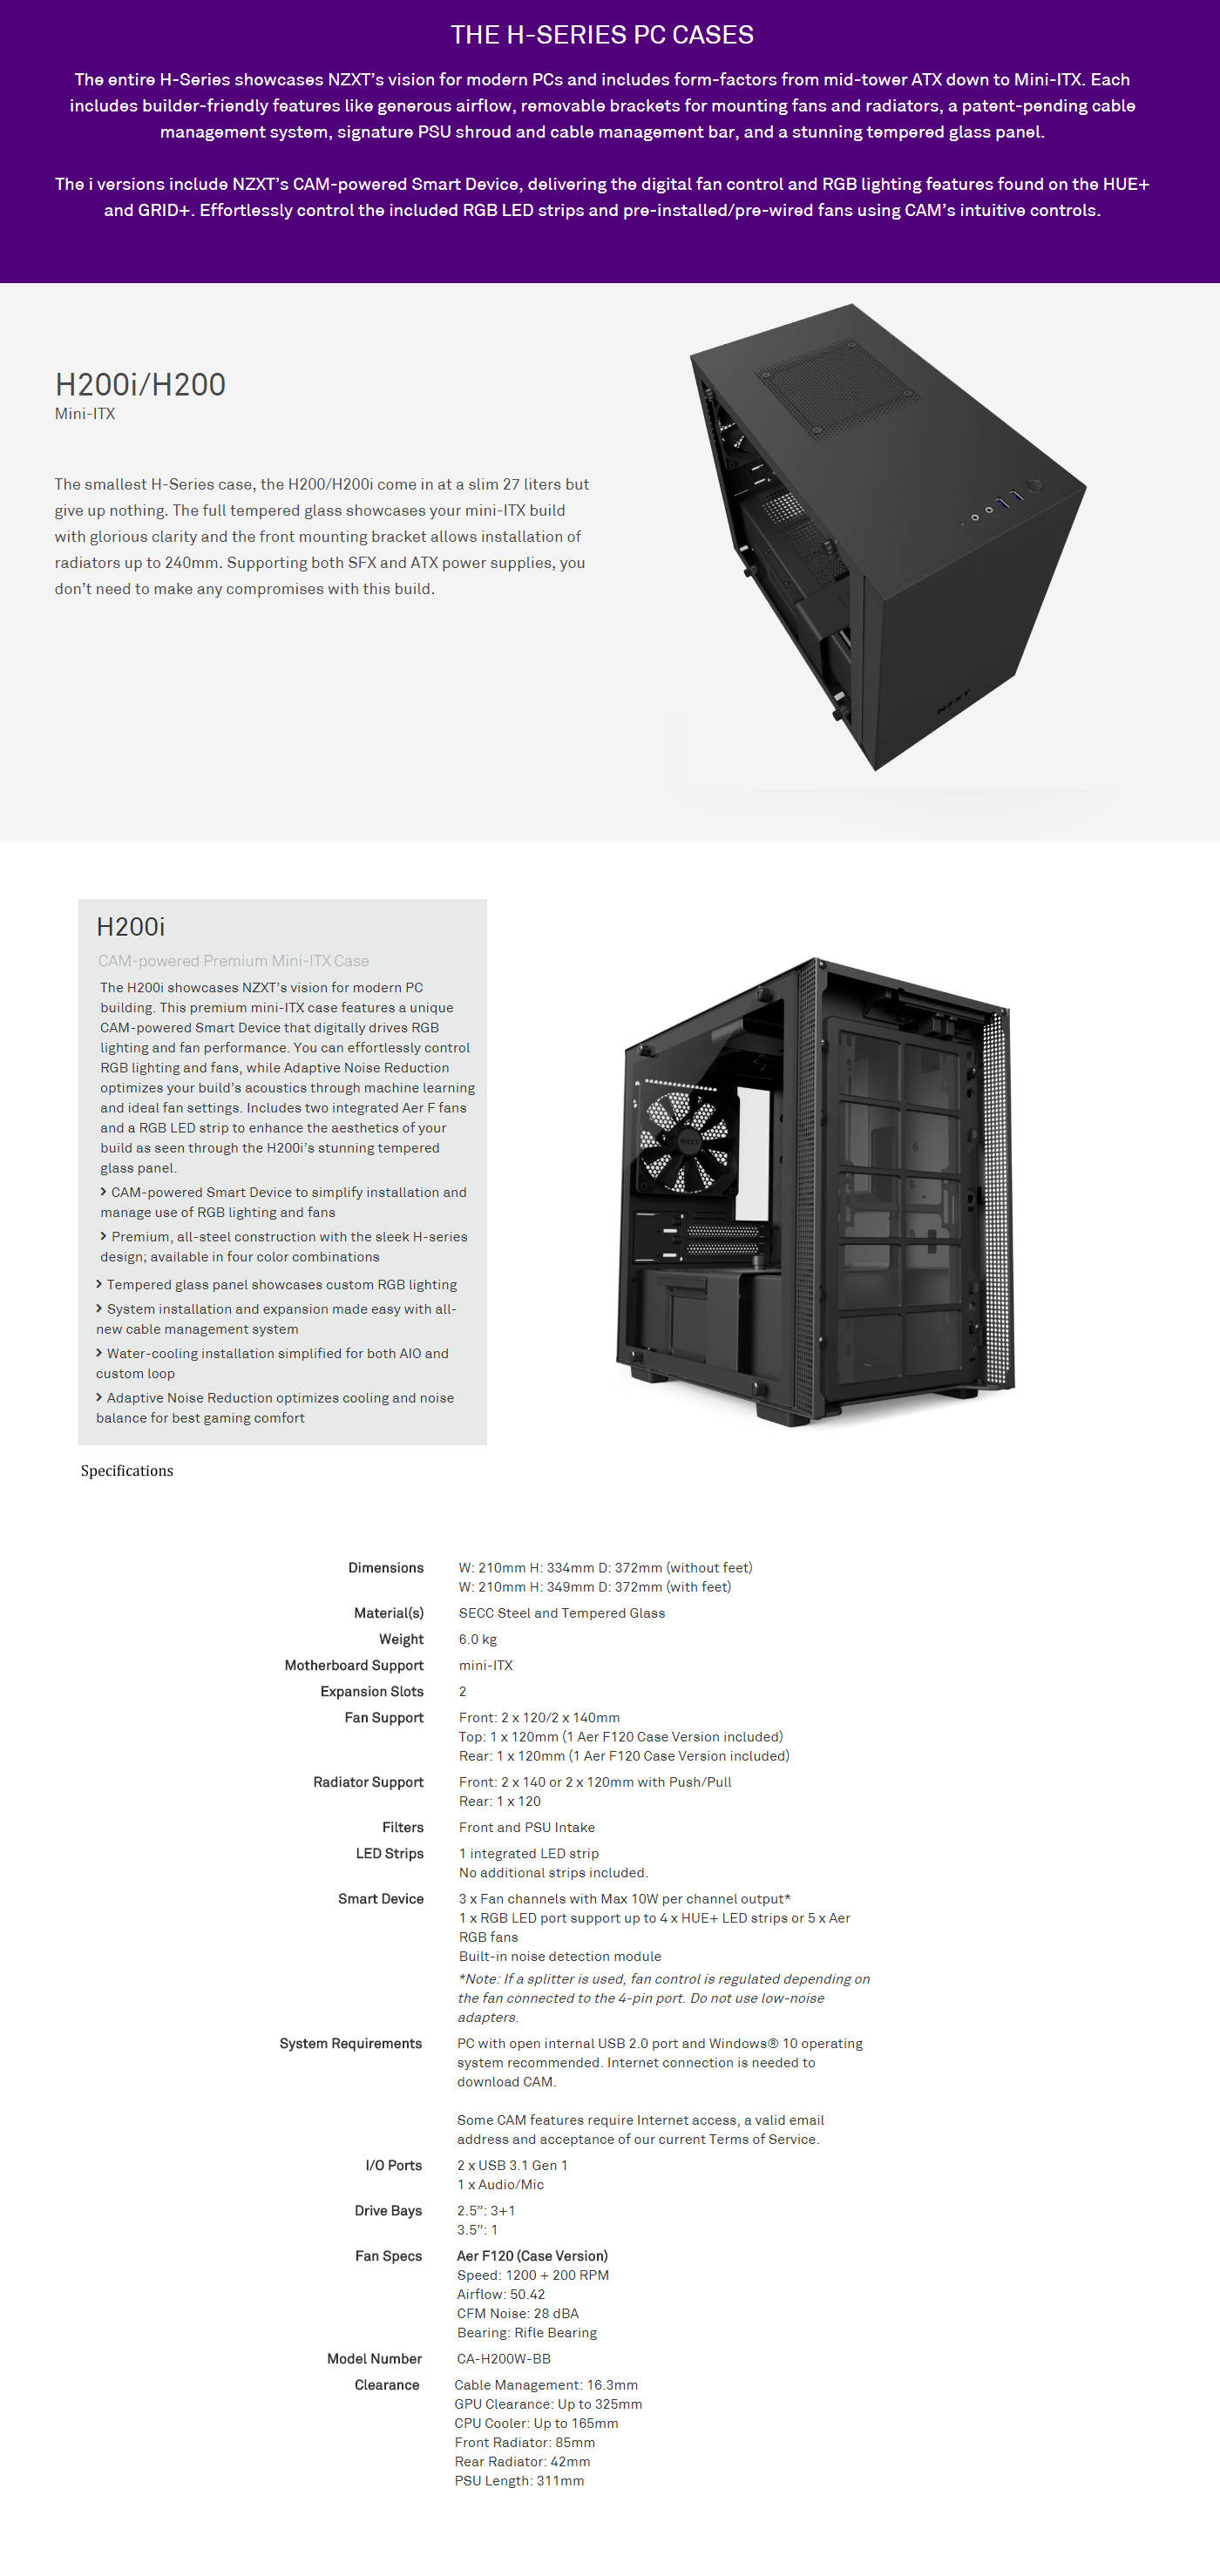  Buy Online Nzxt H200i Premium Mini-ITX Case with CAM - Matte Black (CA-H200W-BB)